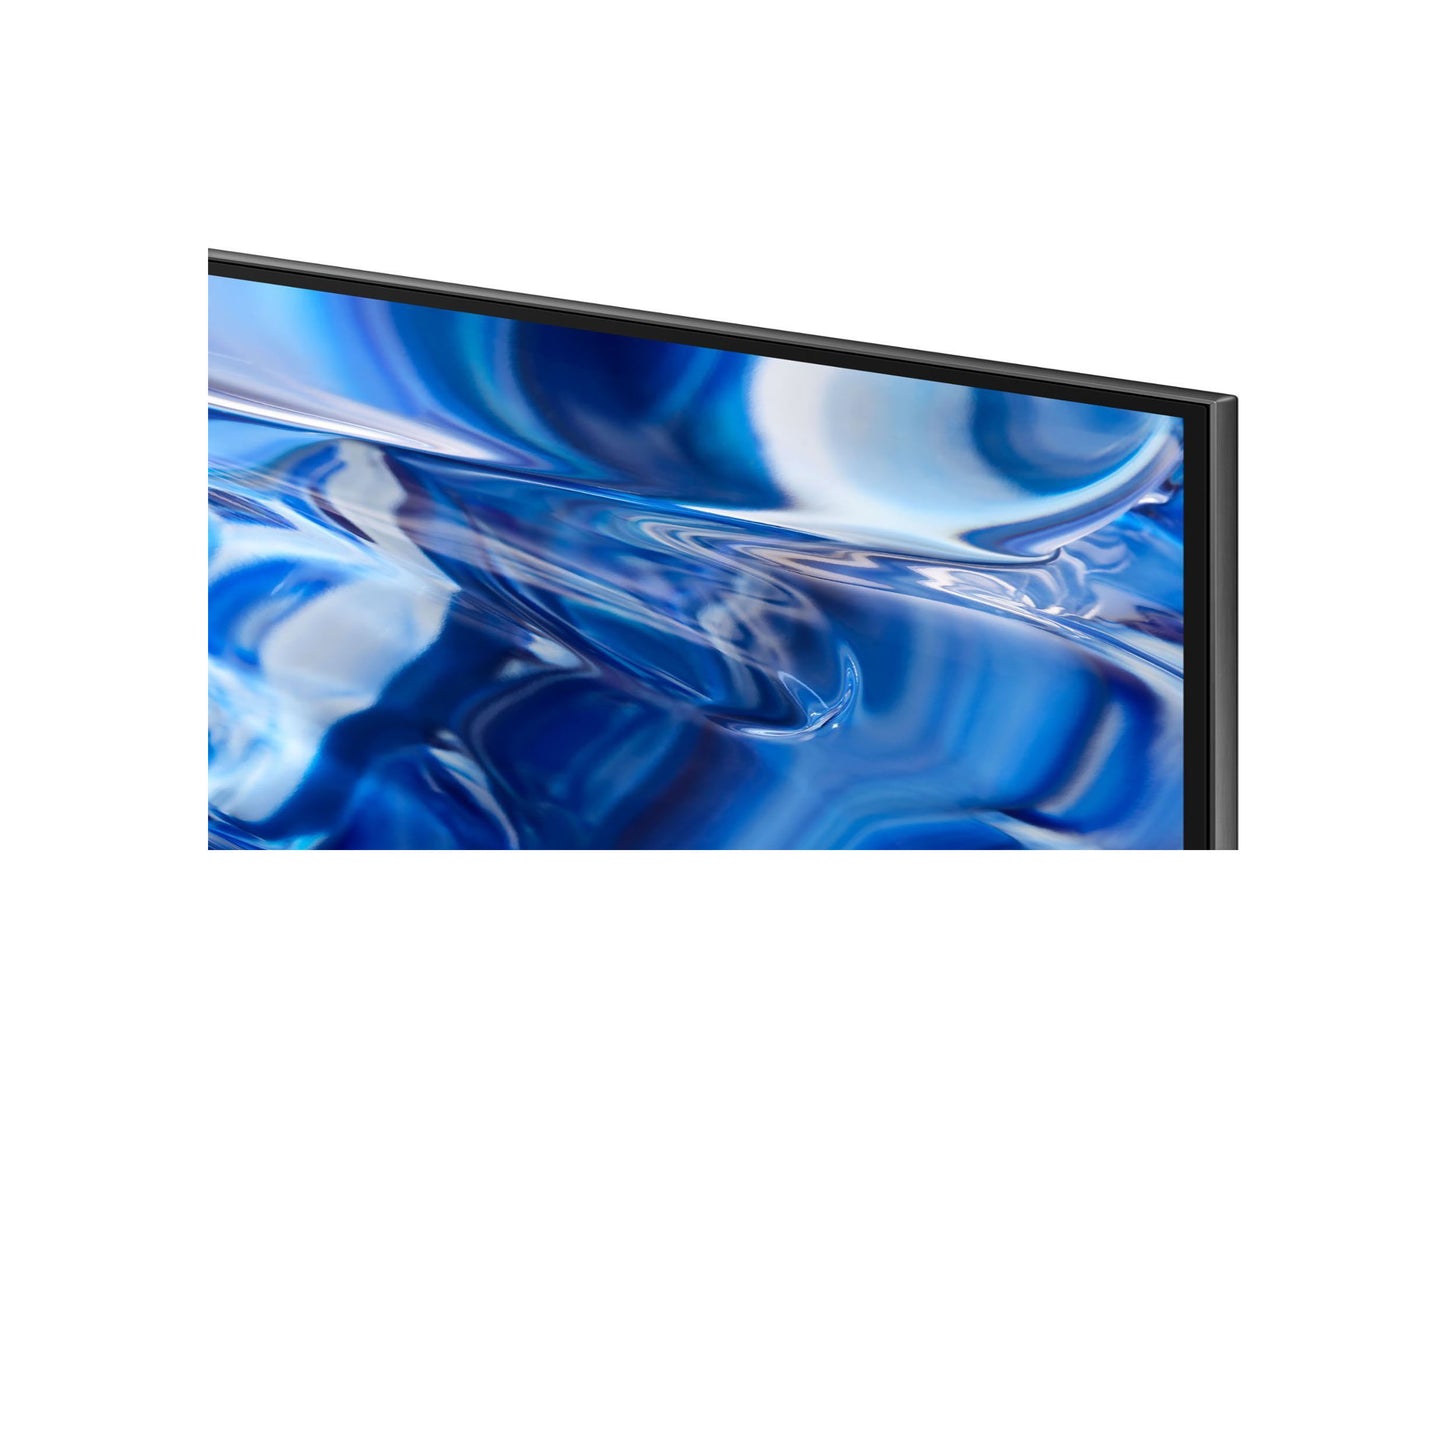 Samsung - تلفزيون Tizen الذكي فئة 77 بوصة S89C OLED 4K UHD 